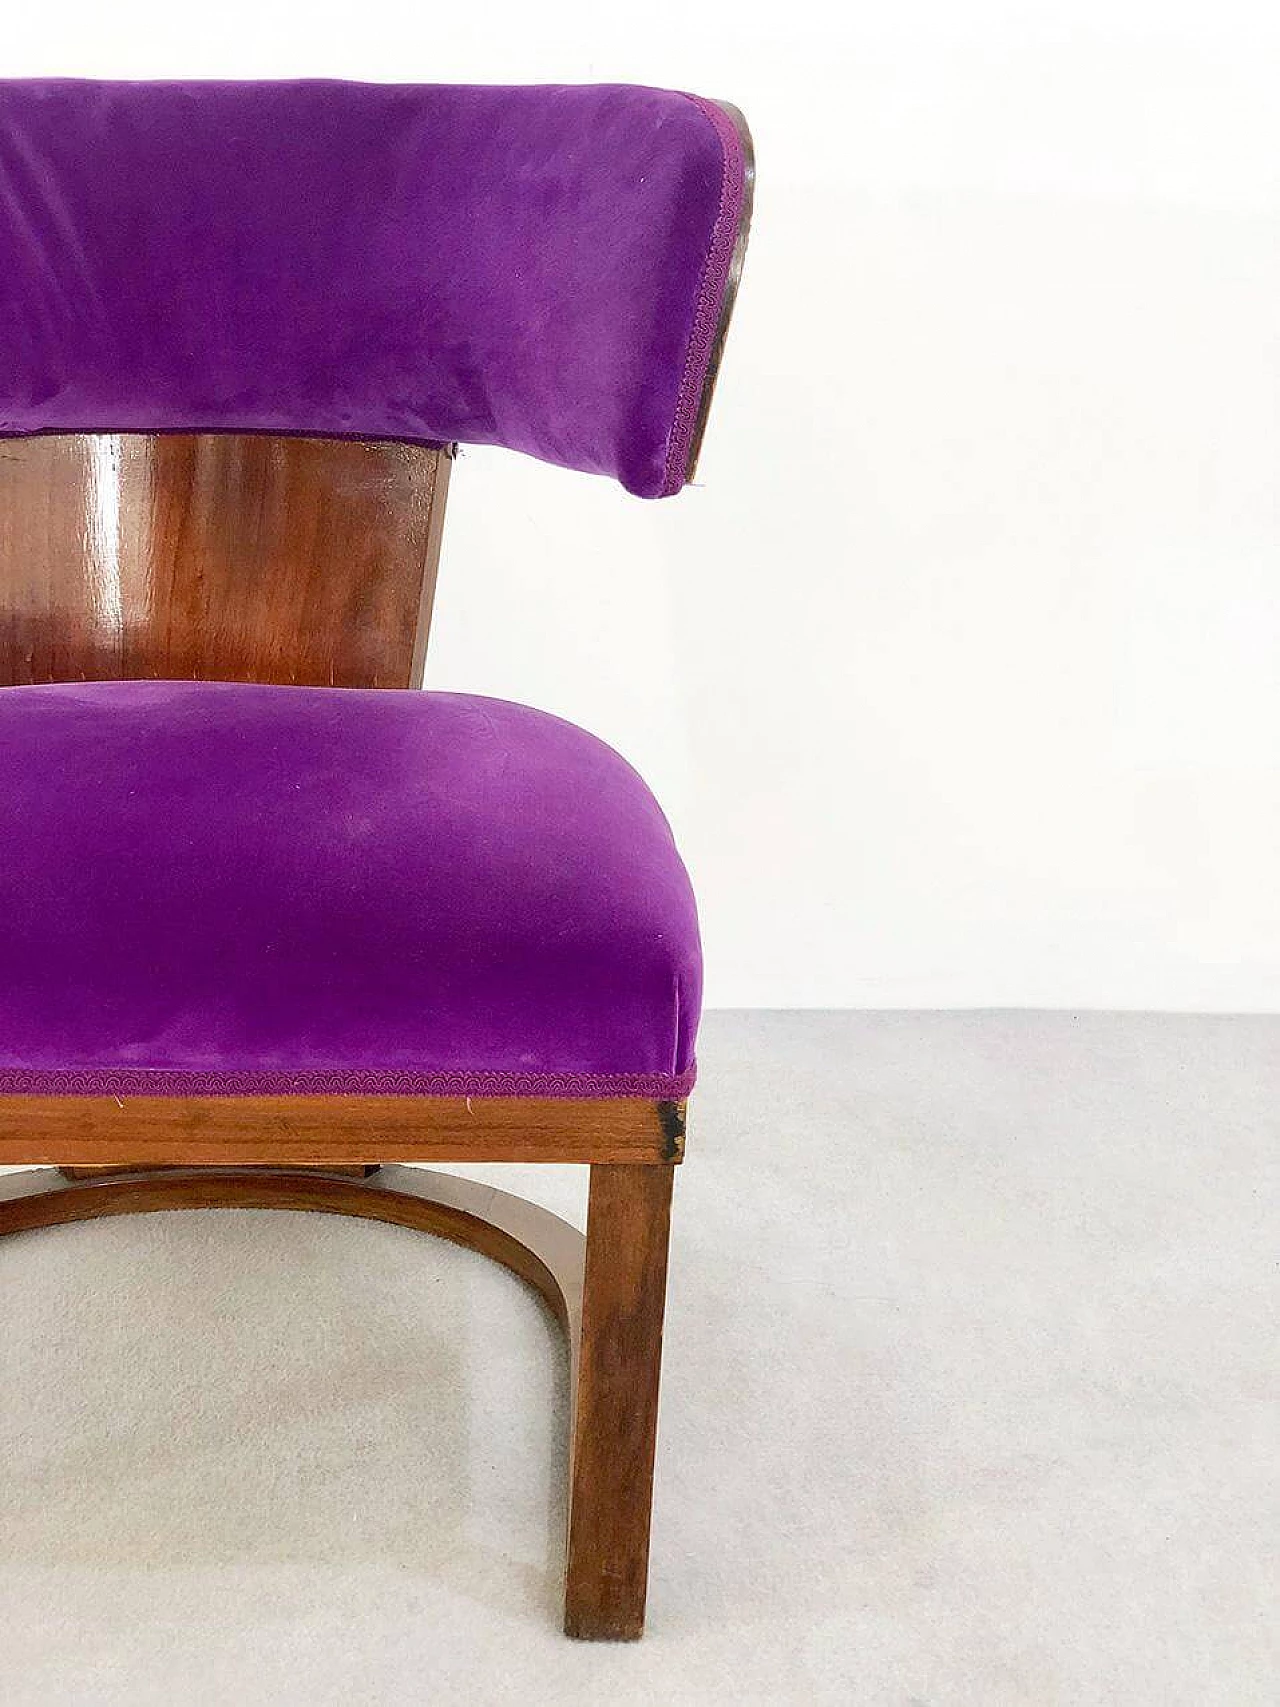 Ernesto Lapadula's armchair in wood and purple velvet, 1930s 1466326